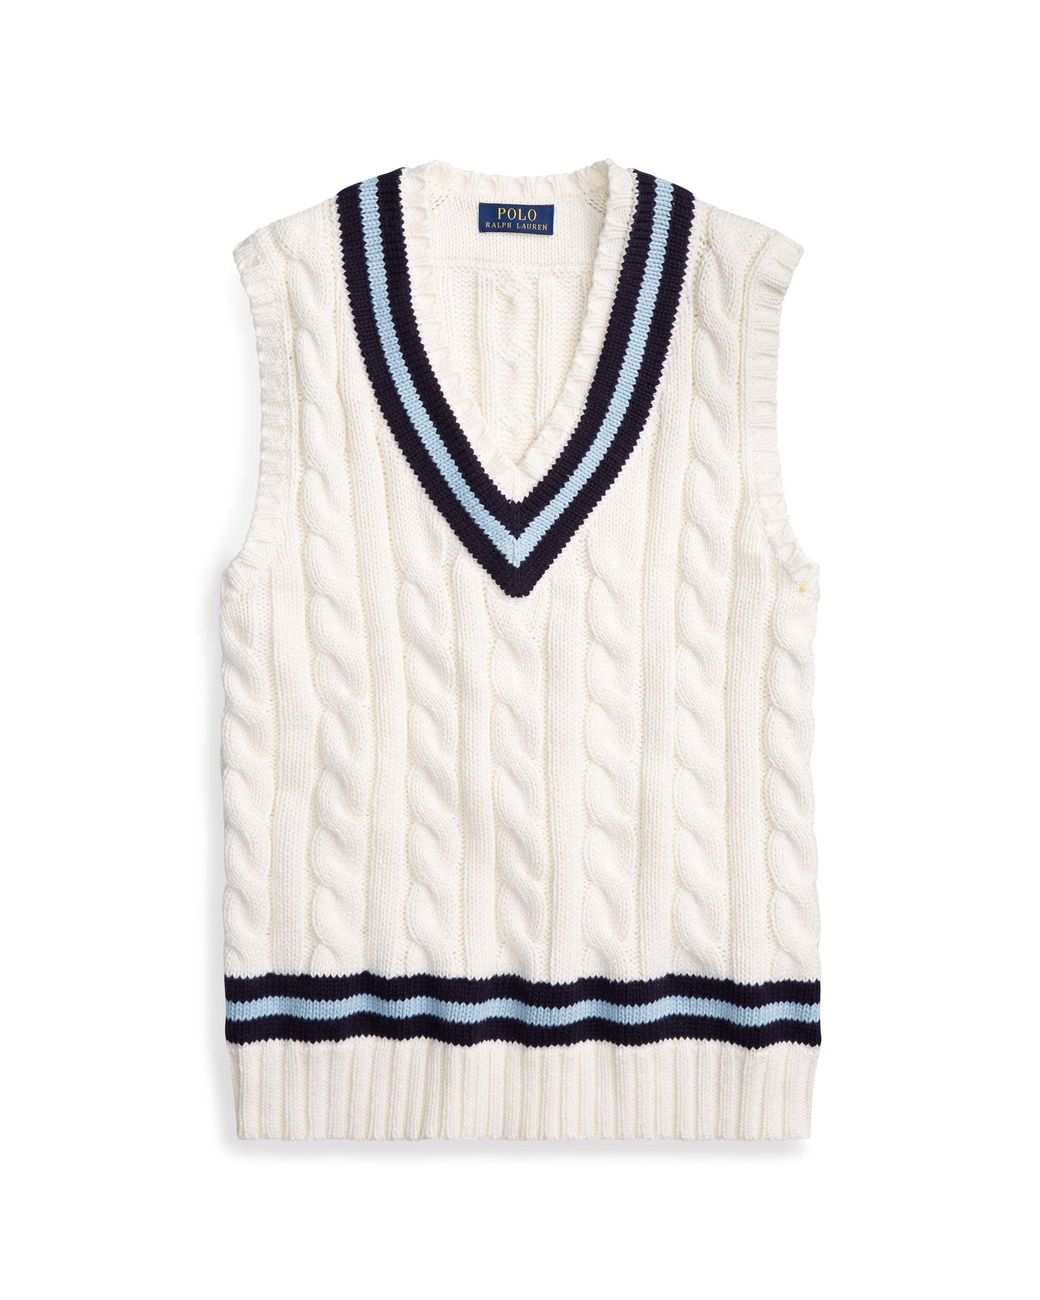 Polo Ralph Lauren Cotton Cricket Sweater Vest in Blue for Men | Lyst